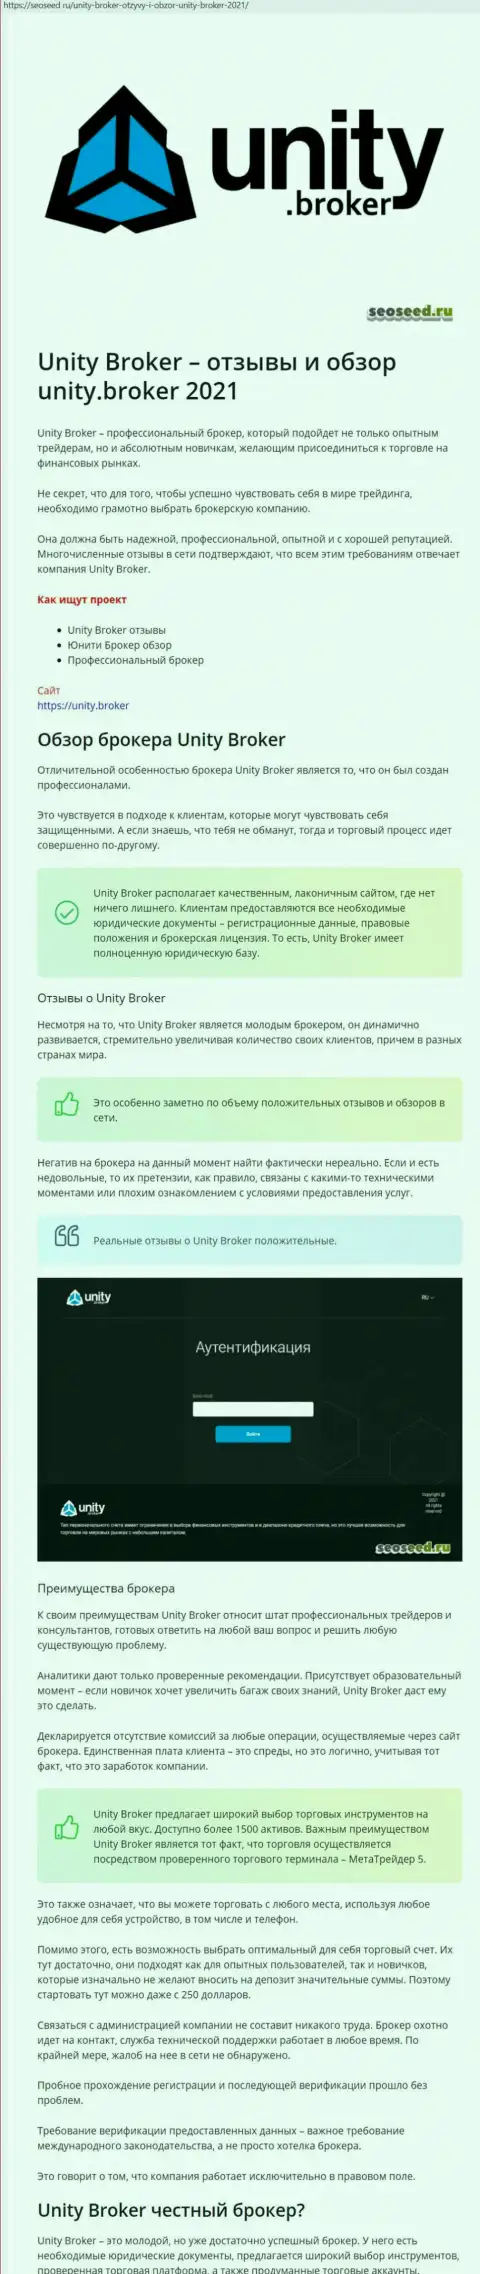 Материал о ФОРЕКС дилере Юнити Брокер на информационном сервисе seoseed ru